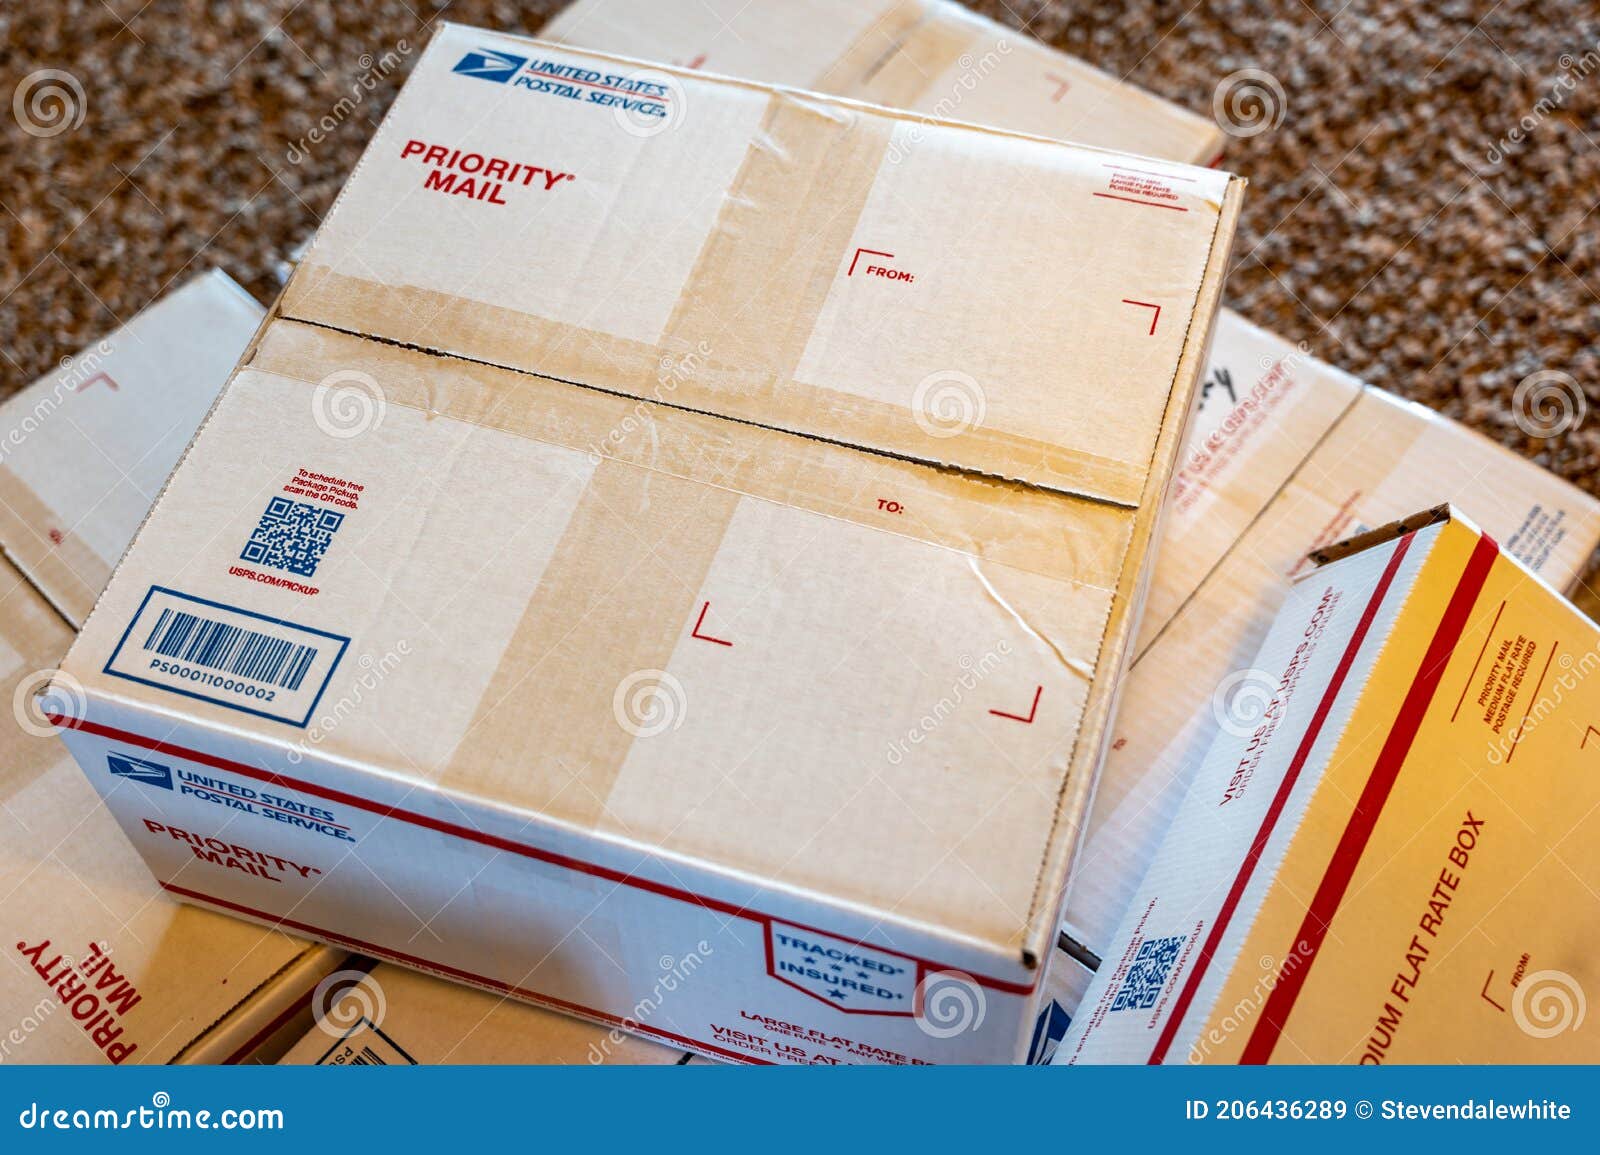 Priority Mail Shoe Box  USPScom